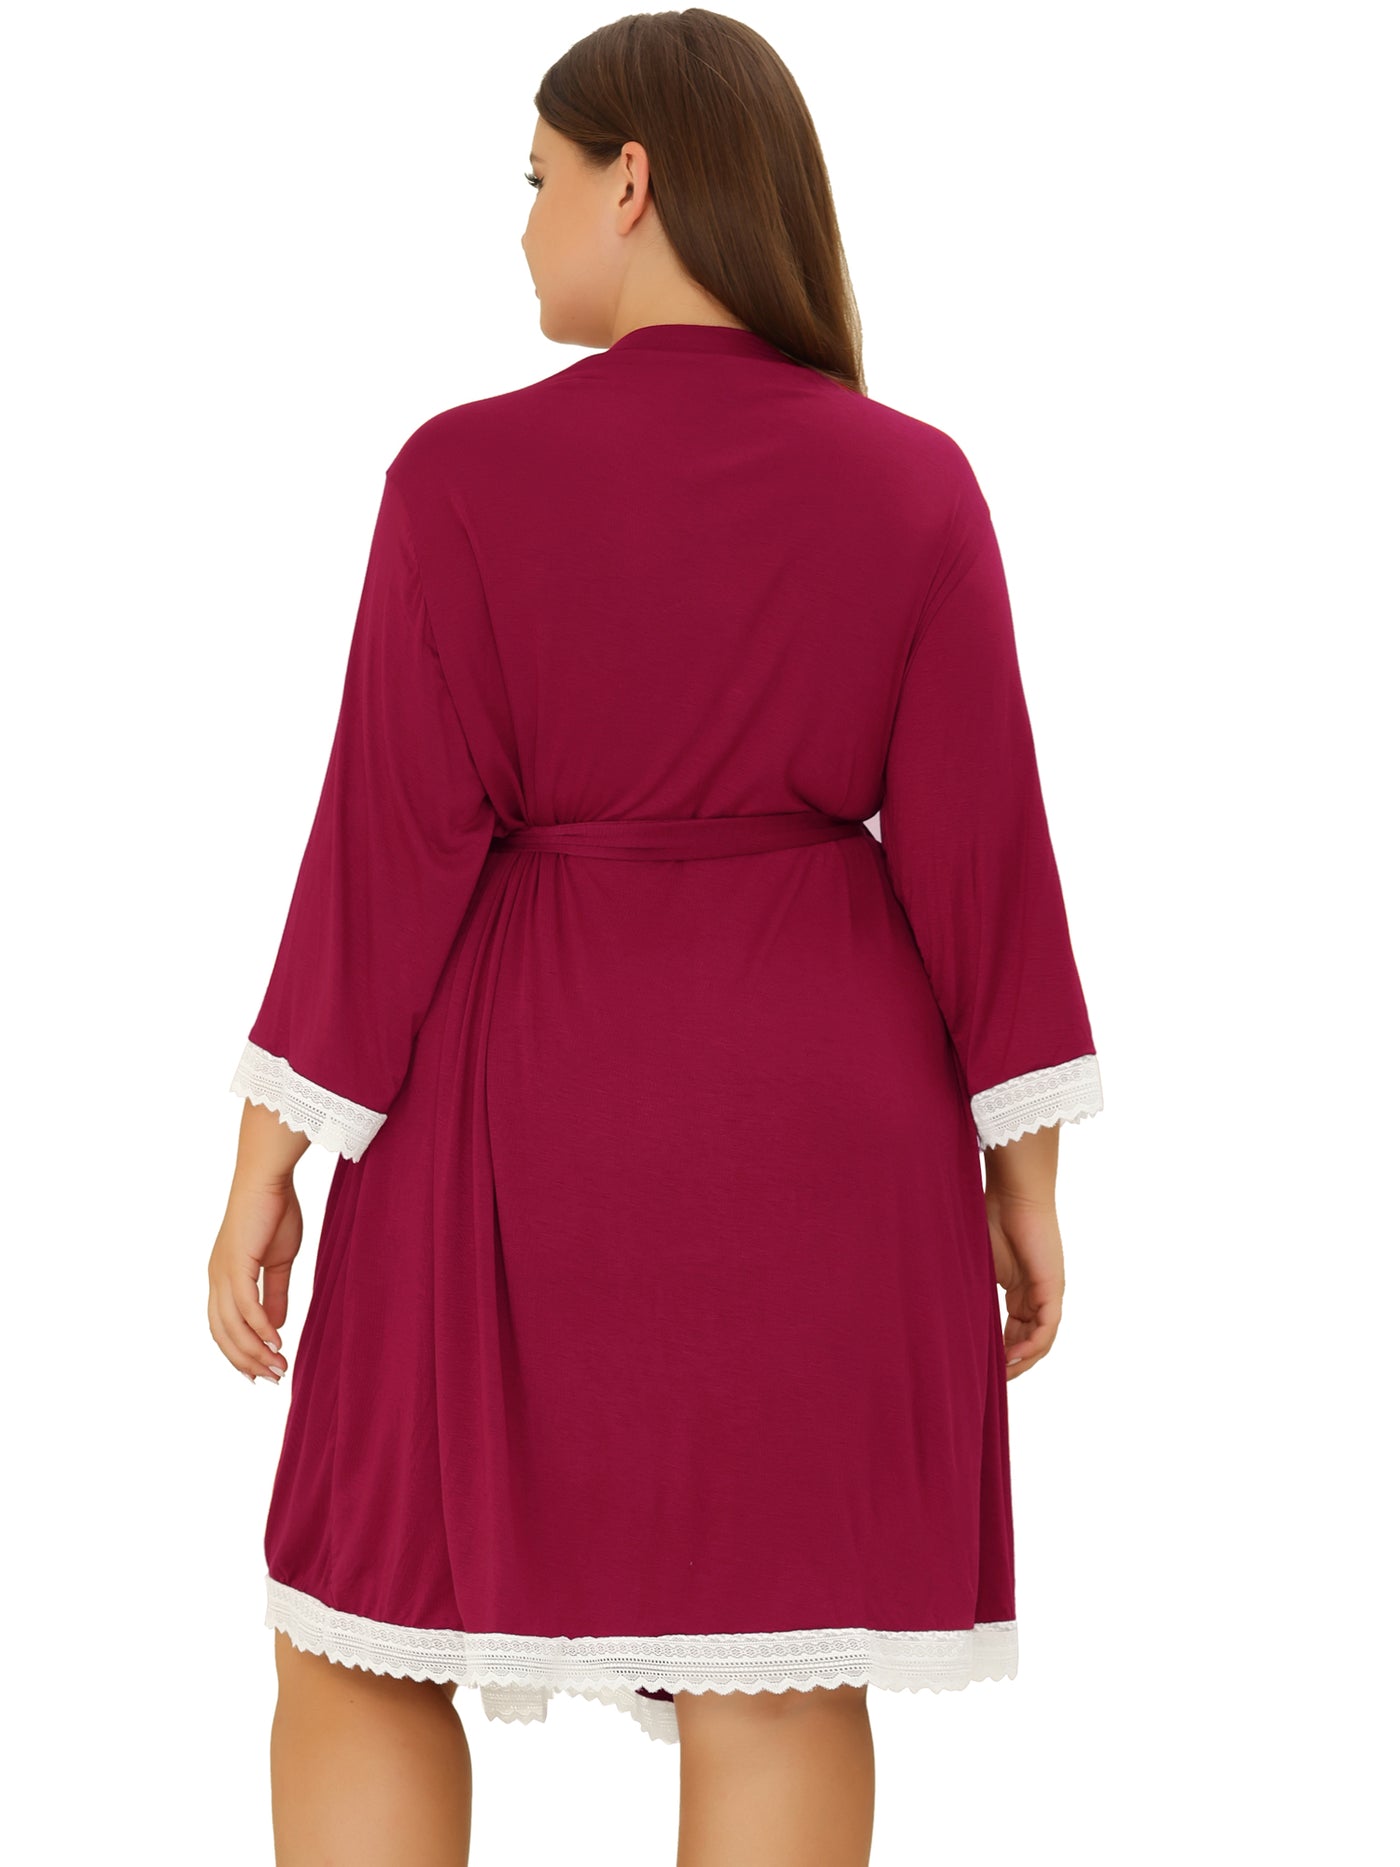 Bublédon Women's Plus Size Nightgown Wrap Bathrobe Tie Belt Lace Trim 3/4 Sleeve Pajama